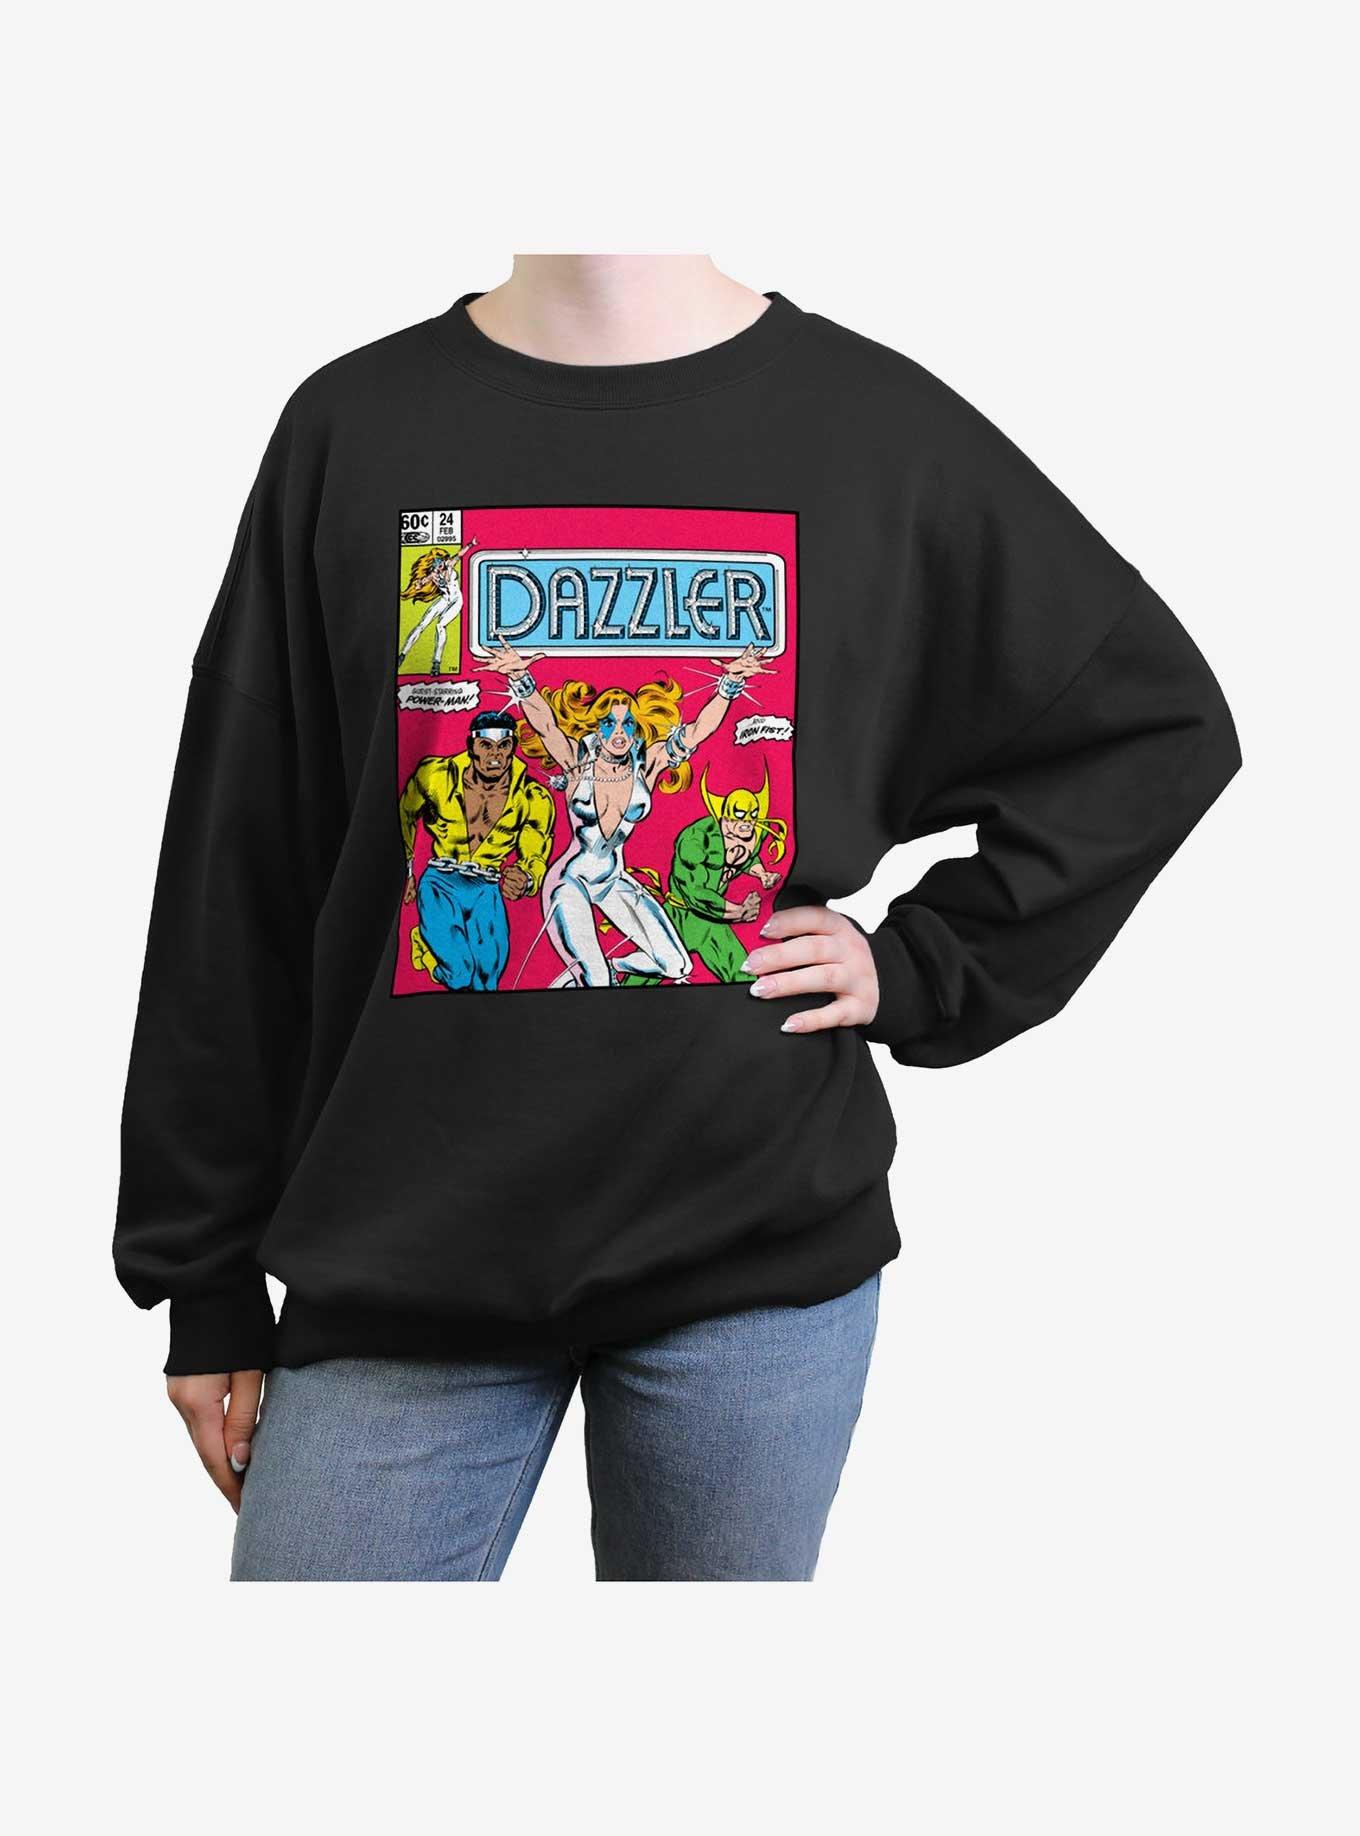 Marvel Dazzler Power Man and Iron Fist Comic Cover Girls Oversized Sweatshirt